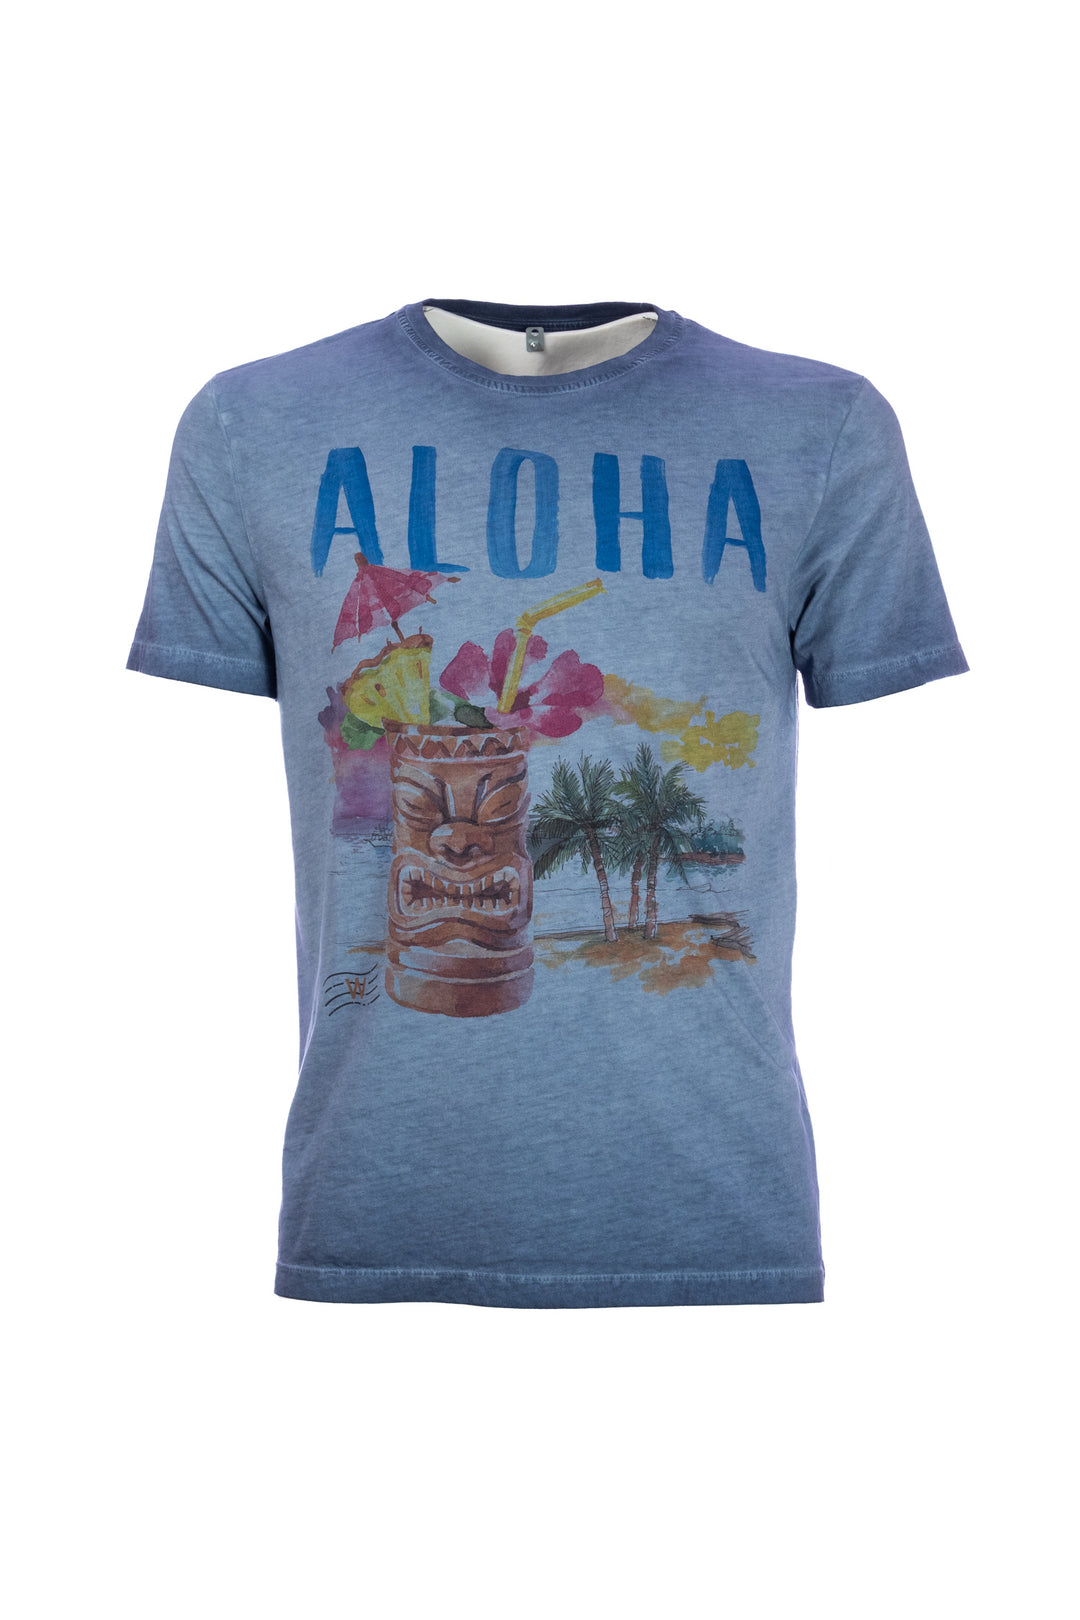 W-POSTAGE T-shirt blu in cotone con stampa “aloha” - Mancinelli 1954